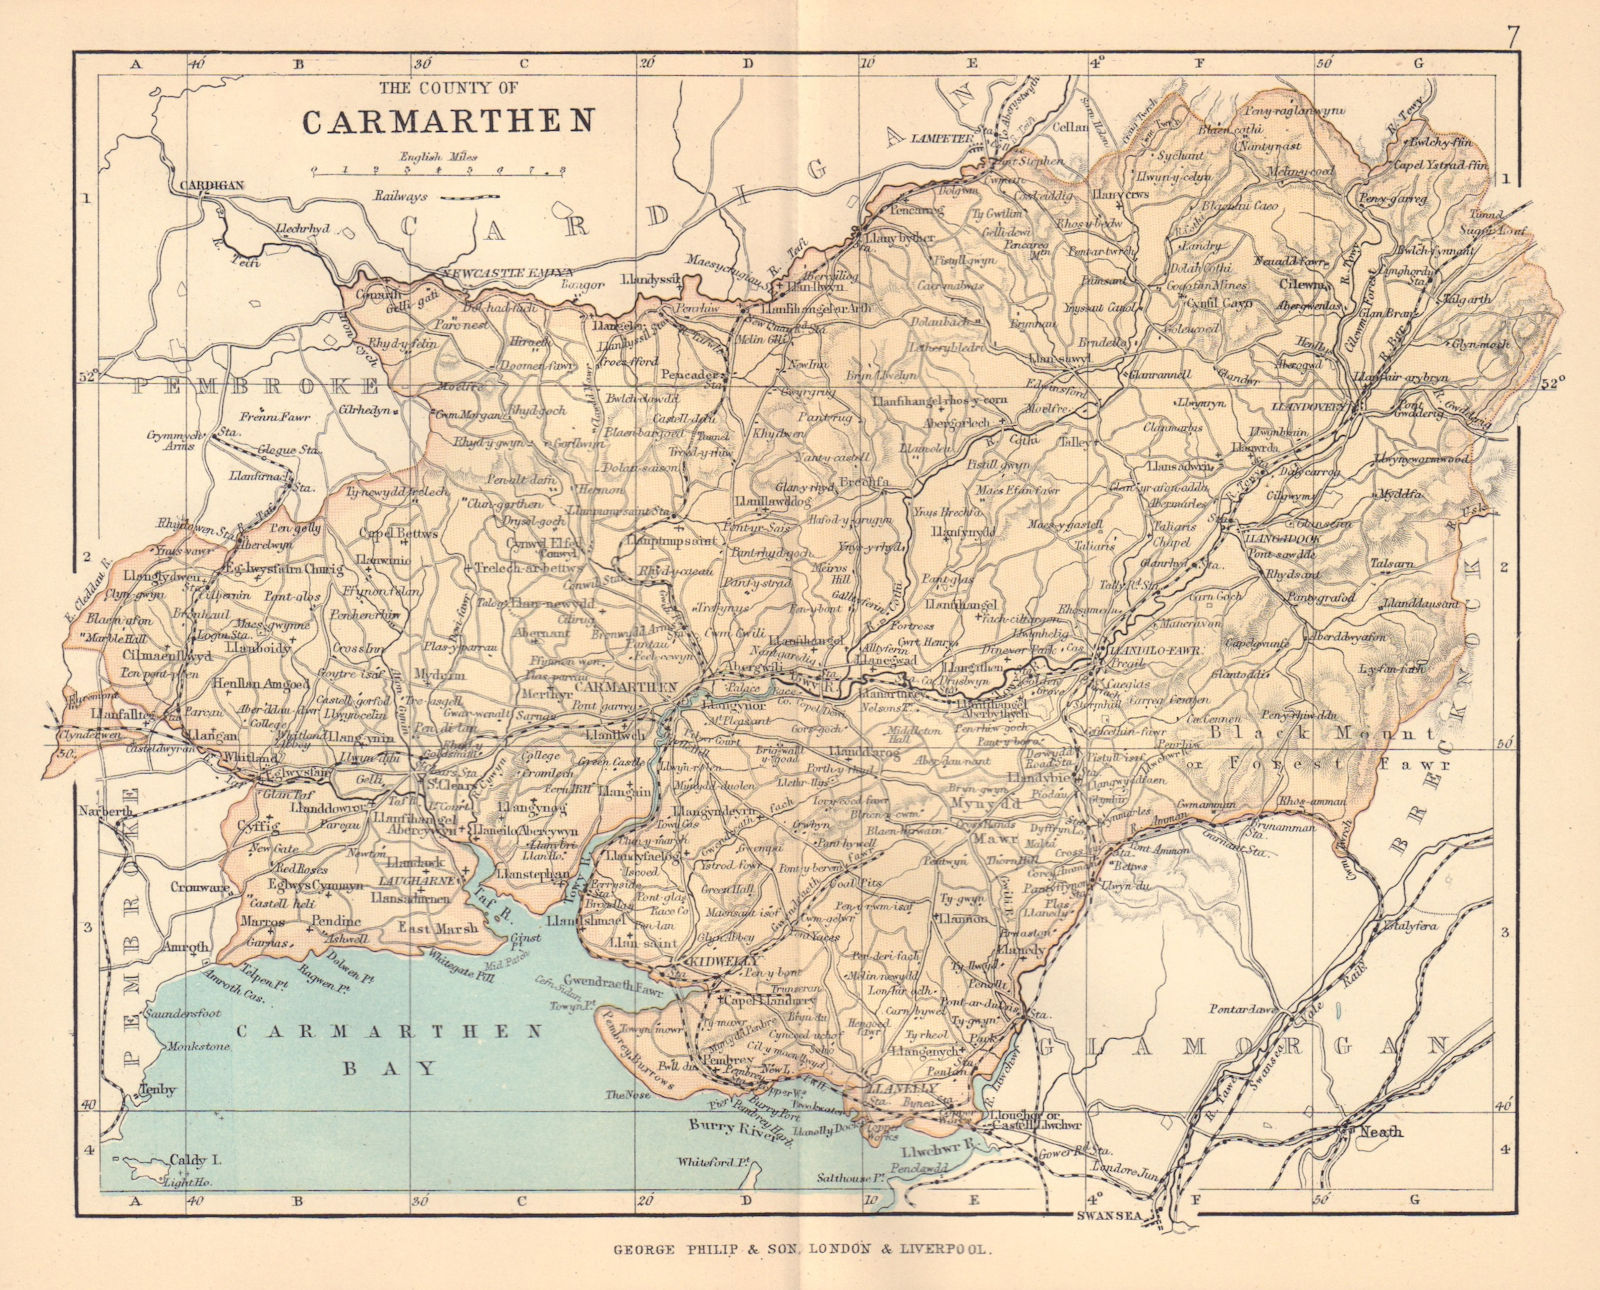 CARMARTHENSHIRE "The County of Carmarthen" Llanelli Wales BARTHOLOMEW 1885 map